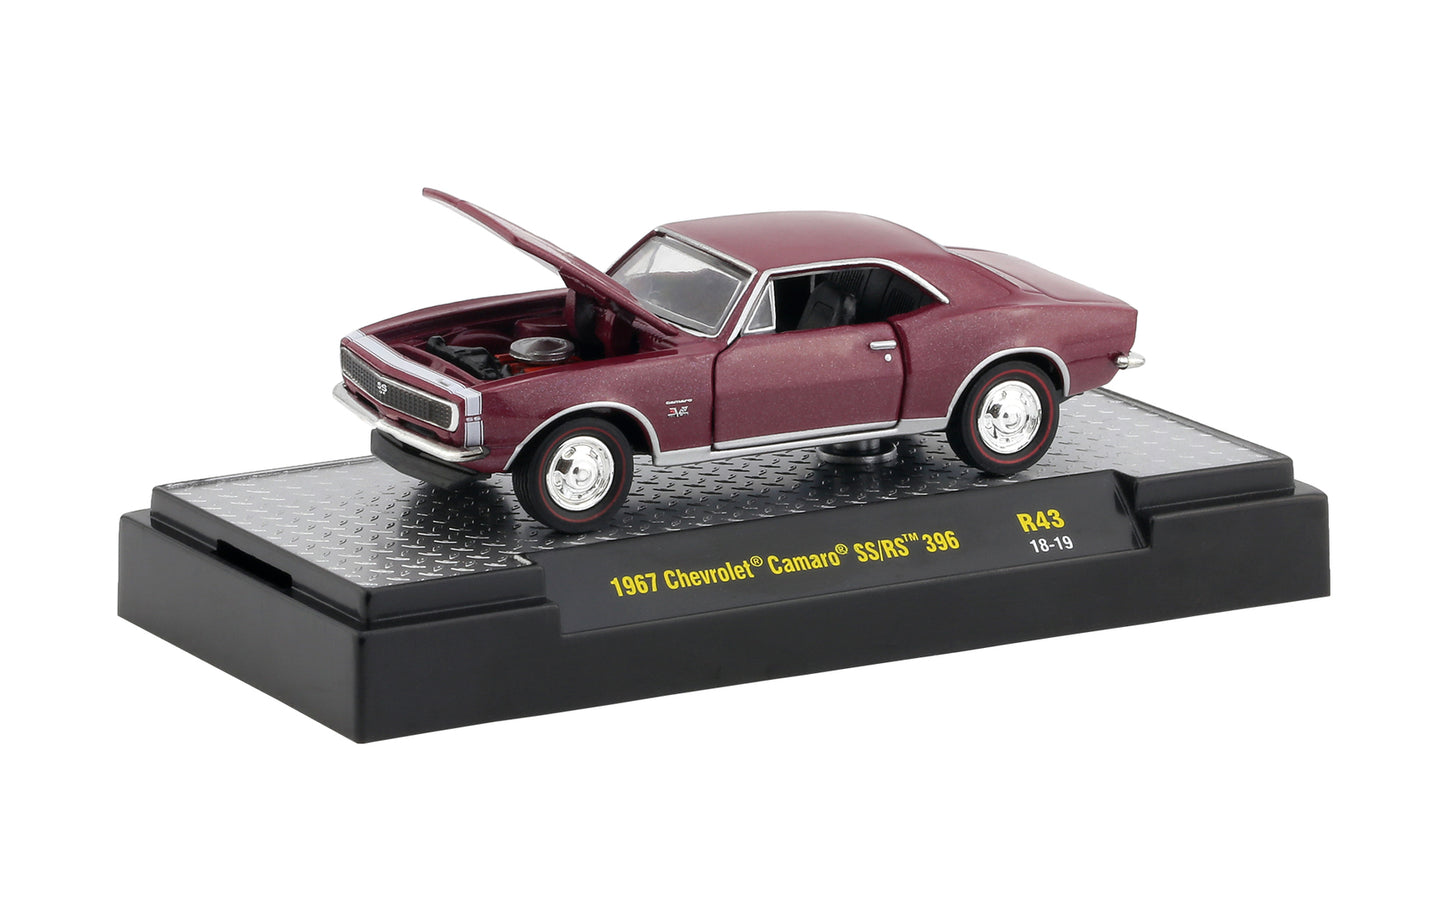 Release 43 - 1967 Chevrolet Camaro SS/RS 396 Die Cast Model